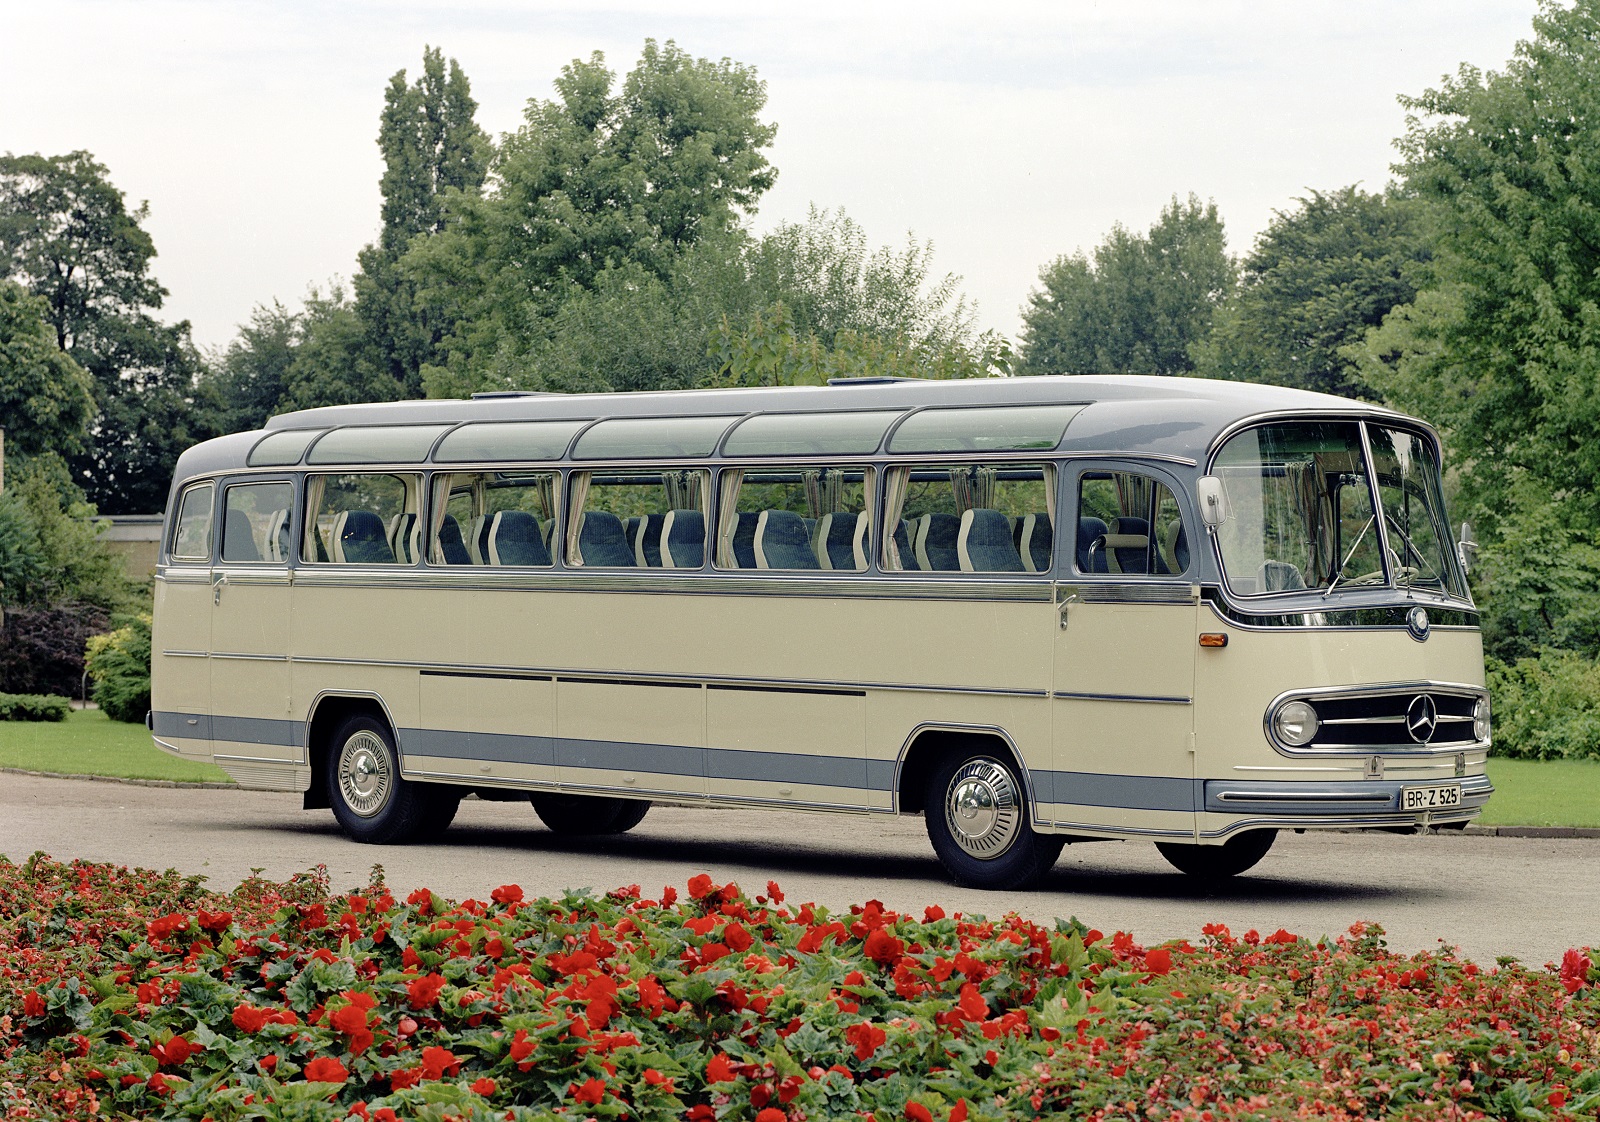 Mercedes-Benz O 321 HL (1957 bis 1964) in der Ausführung als Fernreisebus mit Dachrandverglasung. 

Mercedes-Benz O 321 HL (1957 to 1964) in long-distance coach co nfiguration with roof edge glazing.